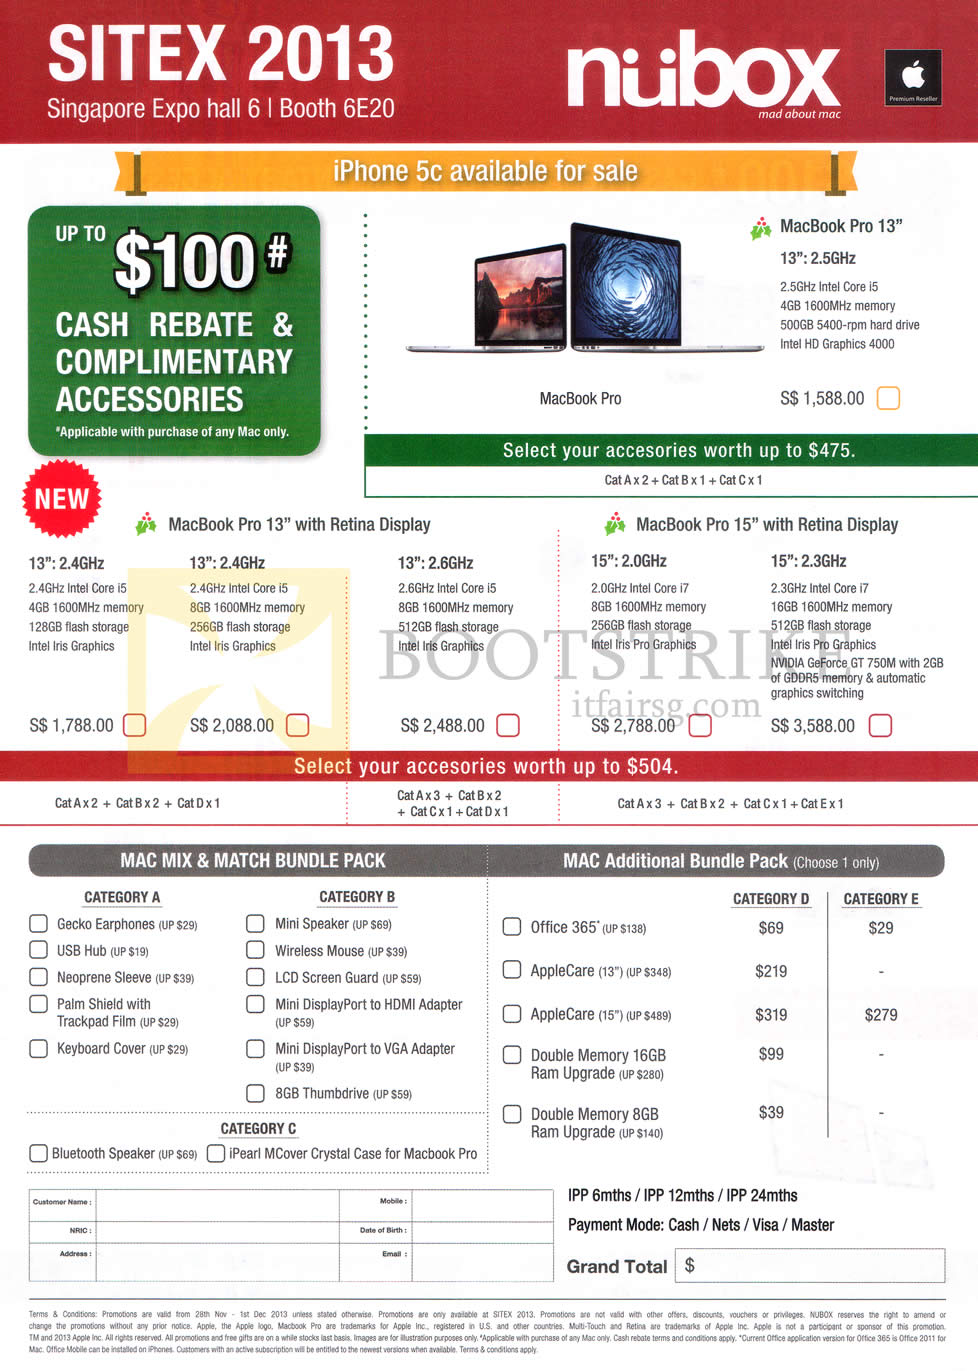 SITEX 2013 price list image brochure of Nubox Apple IPhone 5C, Apple MacBook Pro